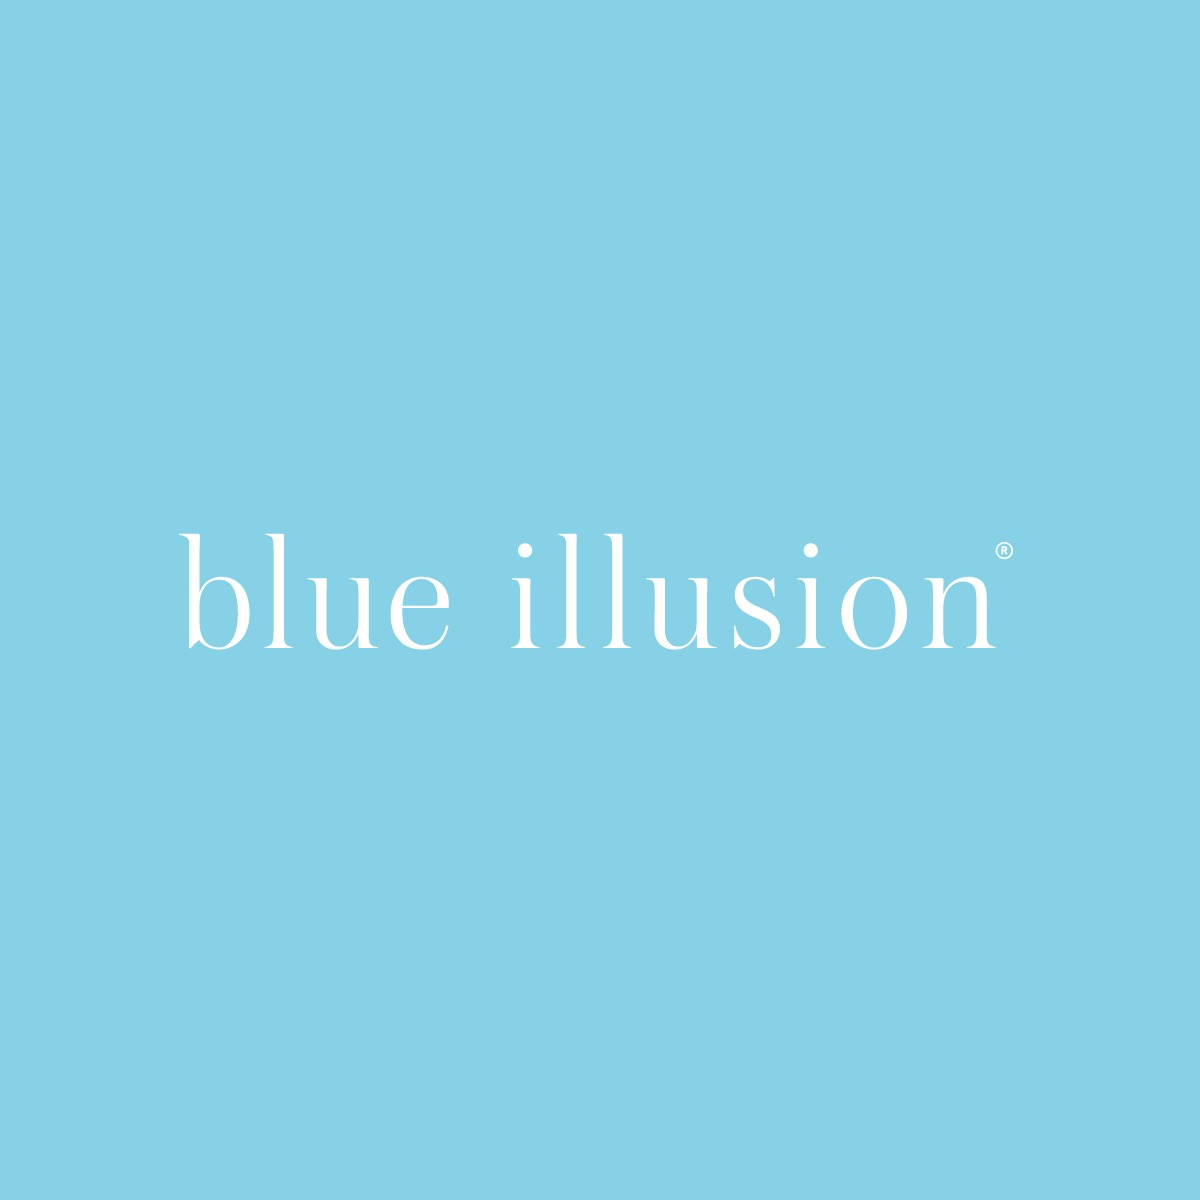 Blue Illusion Coupon Codes